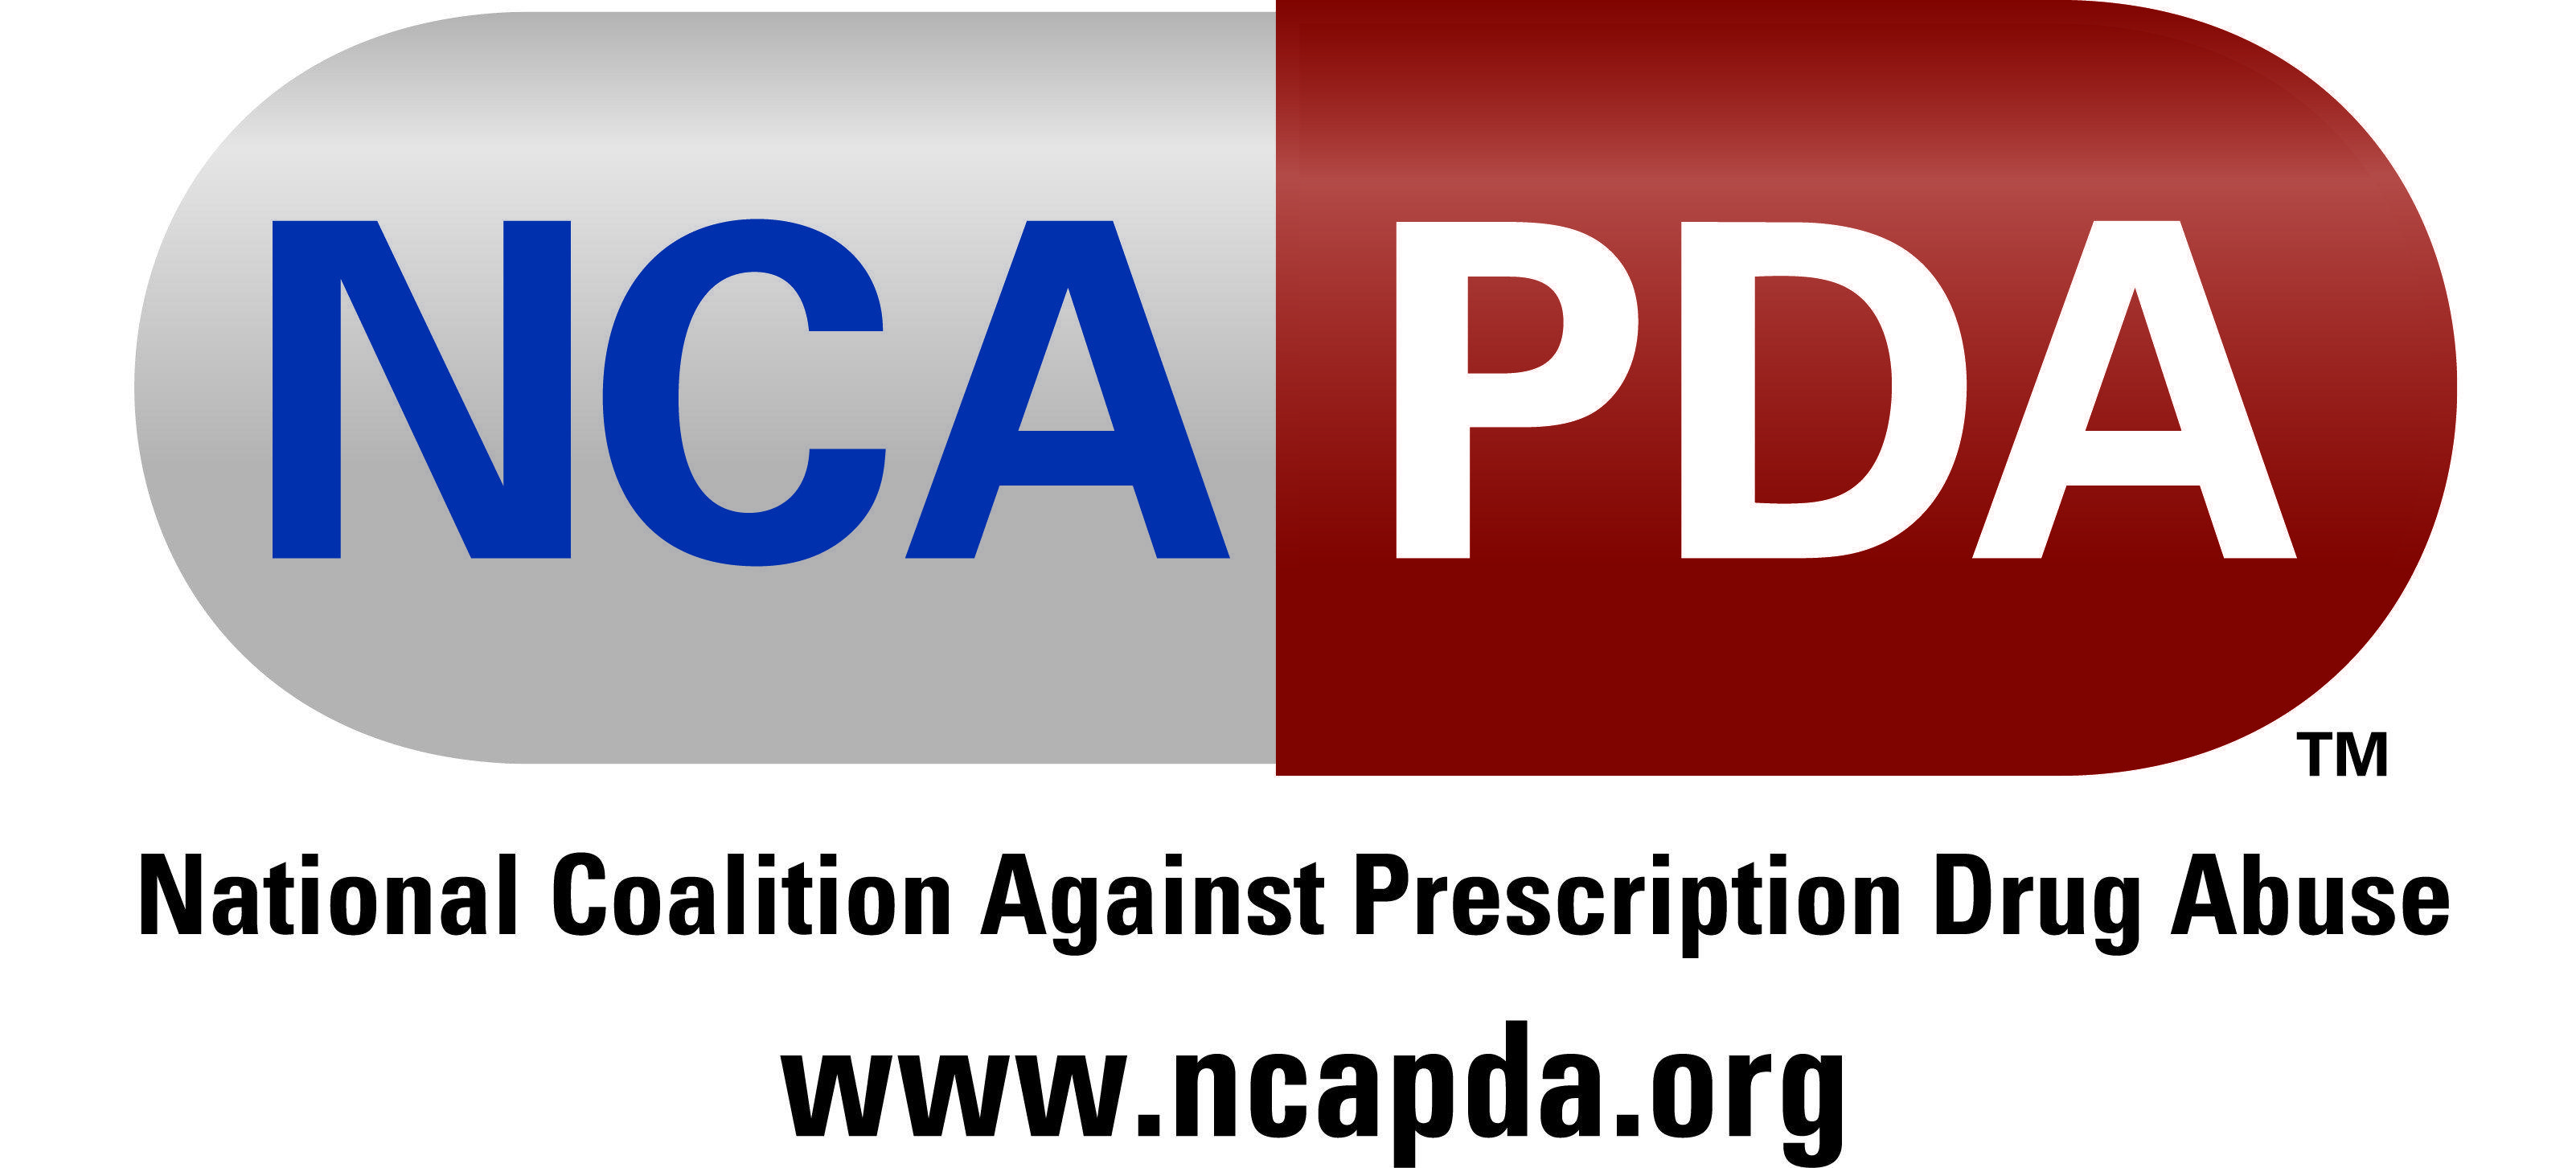 Abuse Logo - Image Gallery. National Coalition Against Prescription Drug Abuse